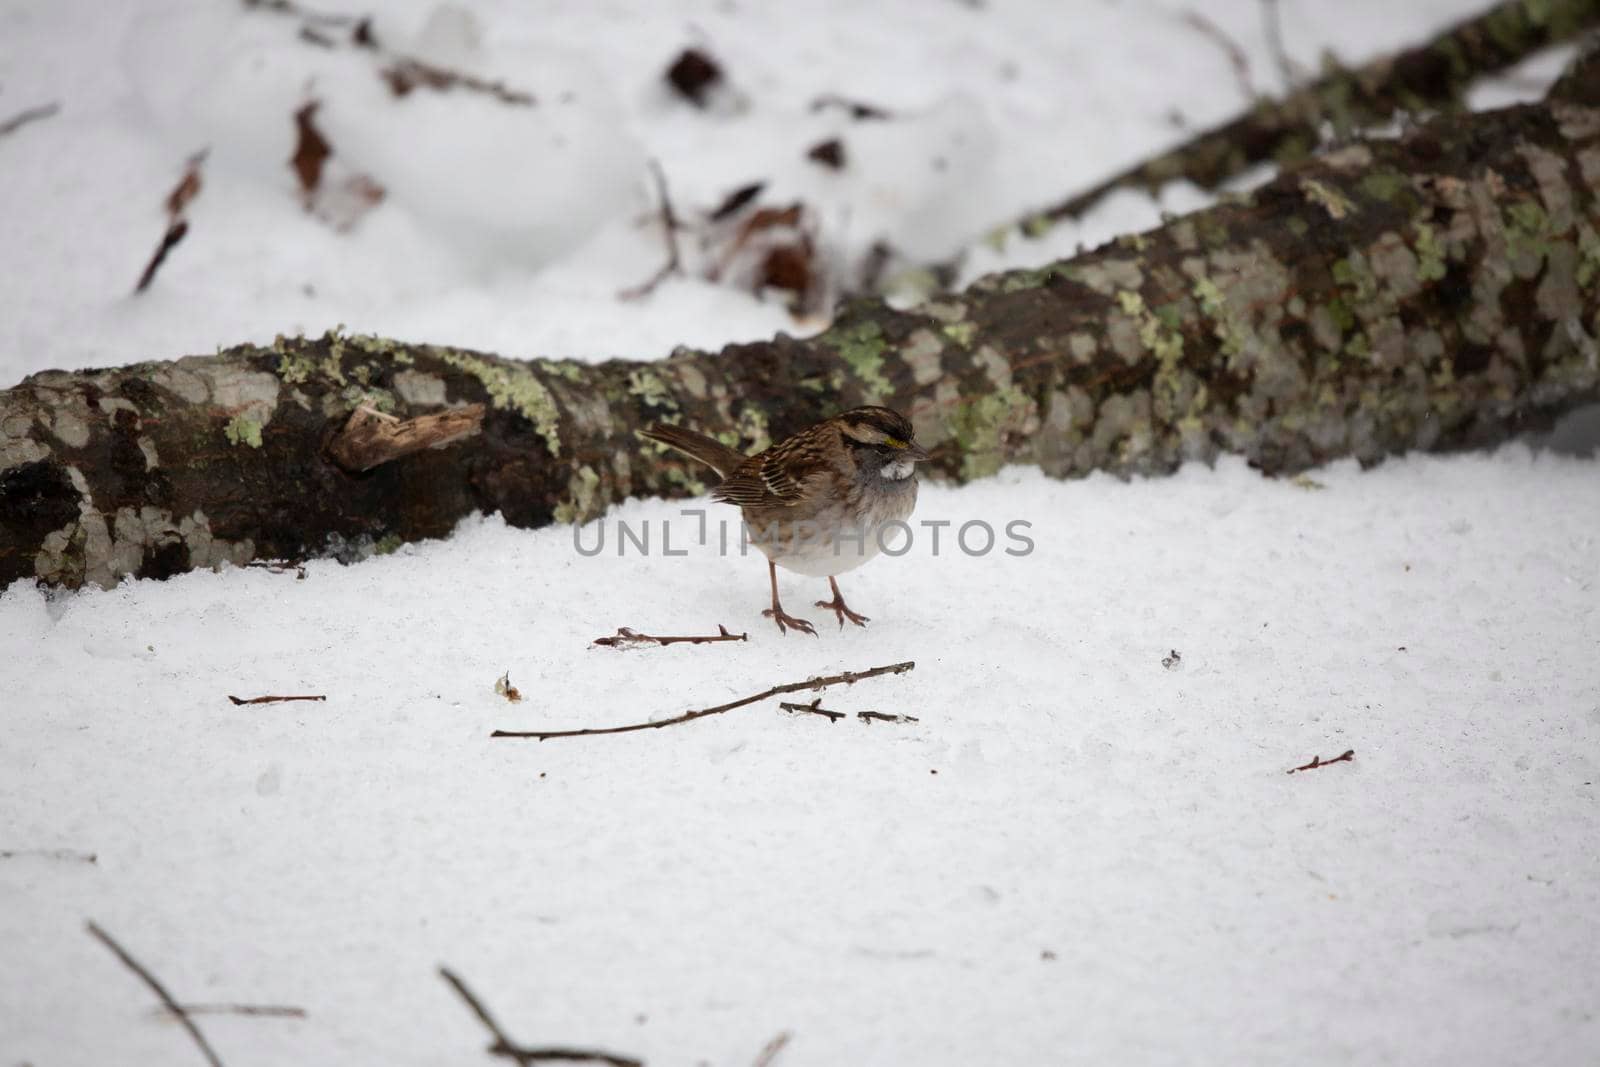 White-throated sparrow (Zonotrichia albicollis) foraging on the icy ground near a fallen tree limb